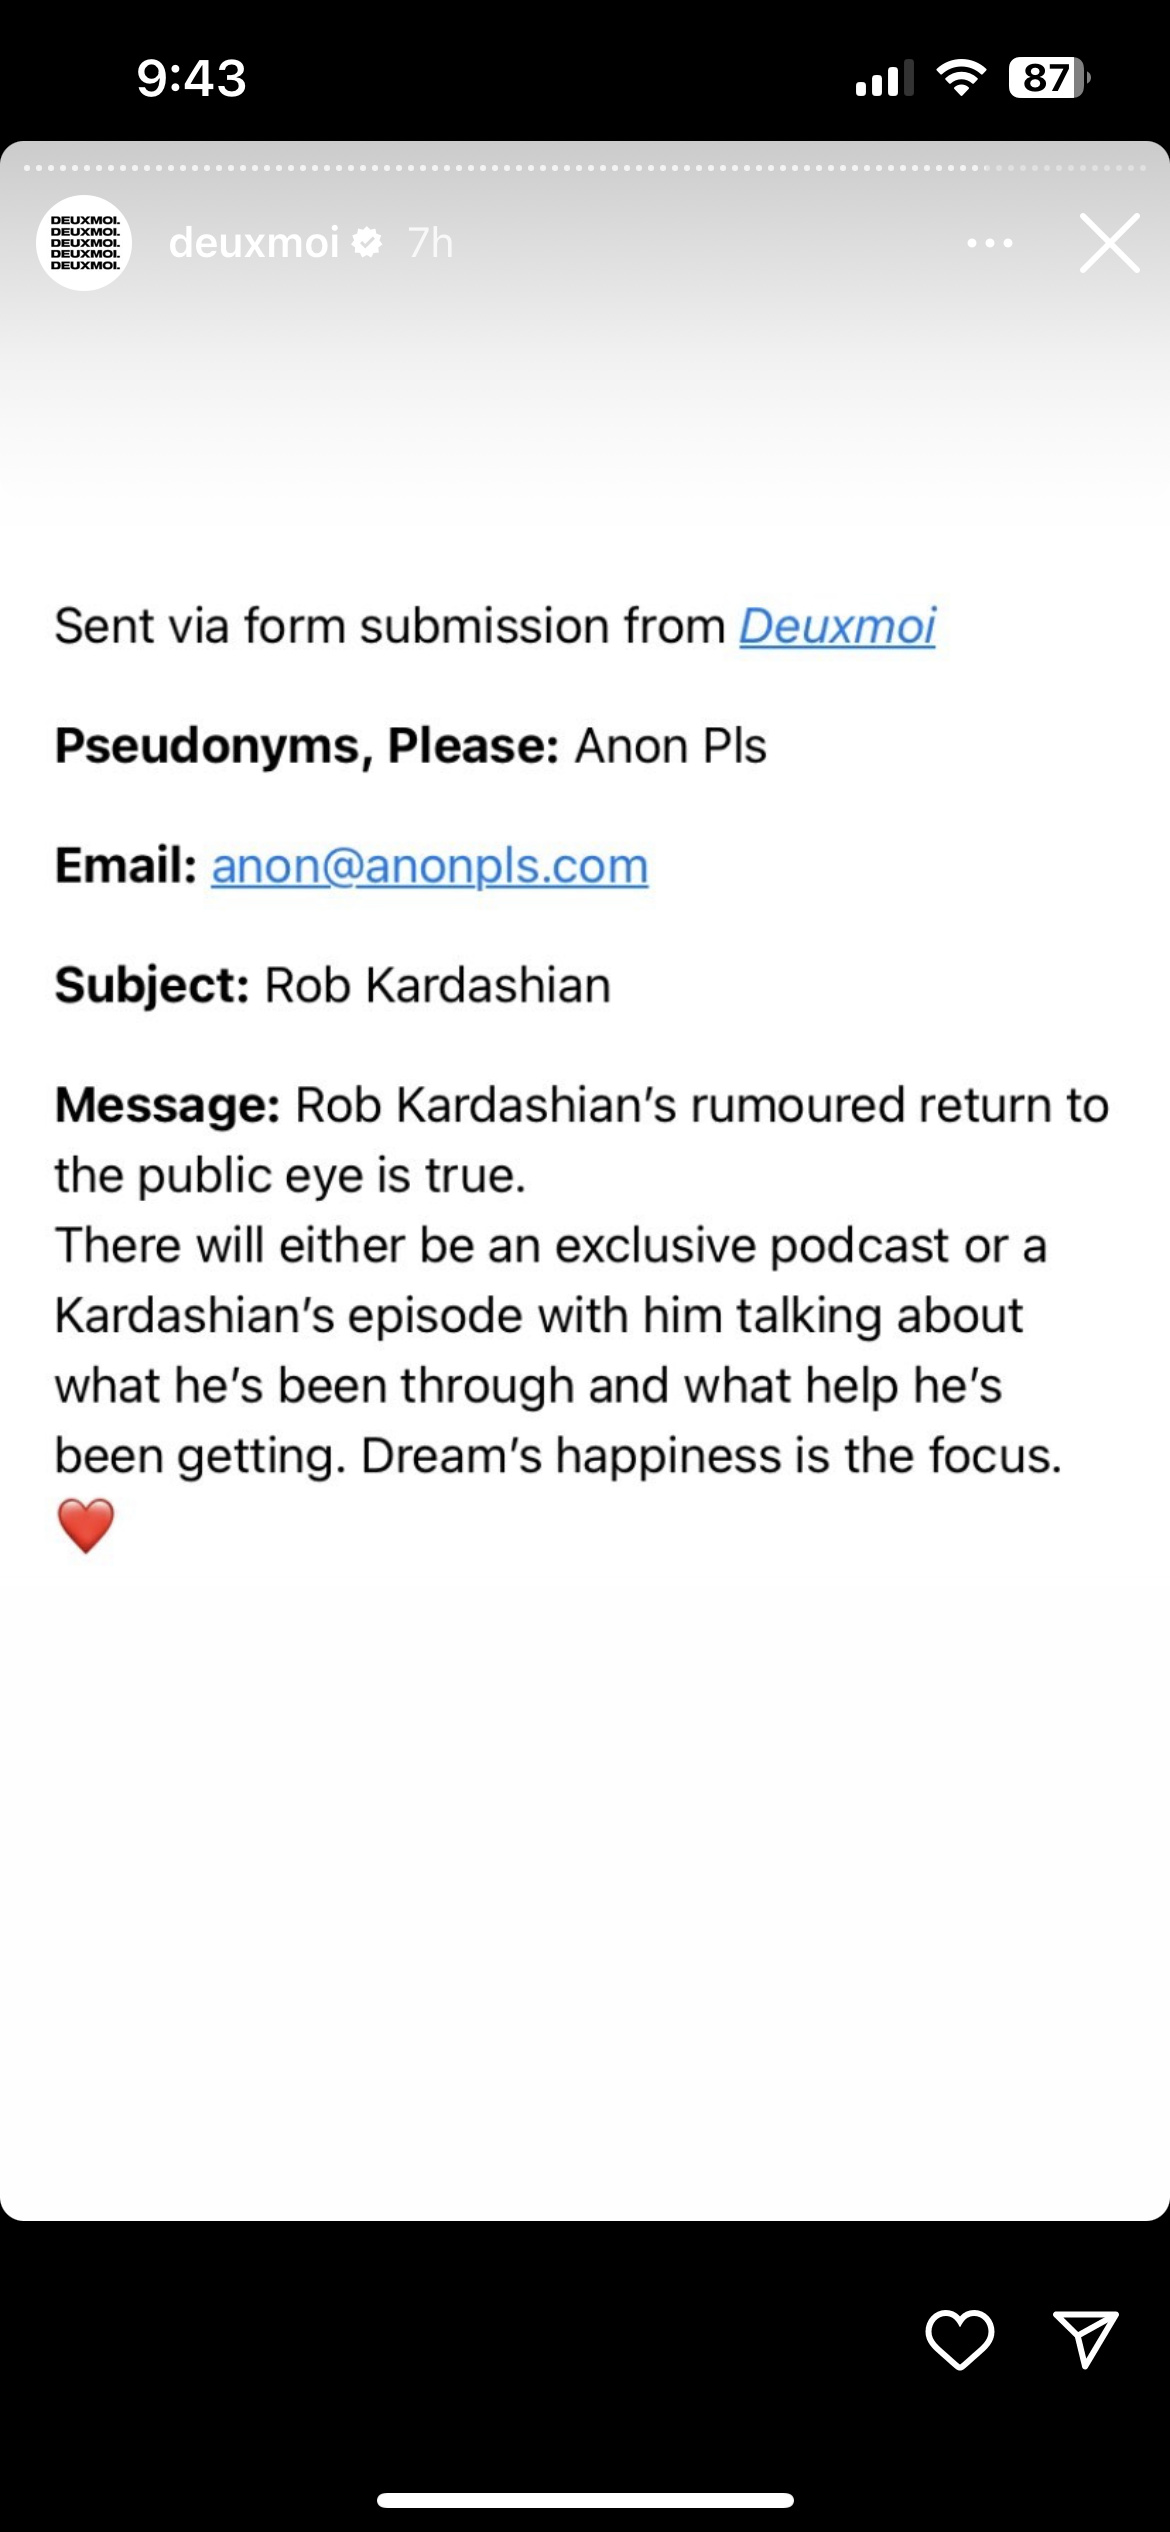 Deuxmoi revealing that Rob Kardashian might have a comeback. 